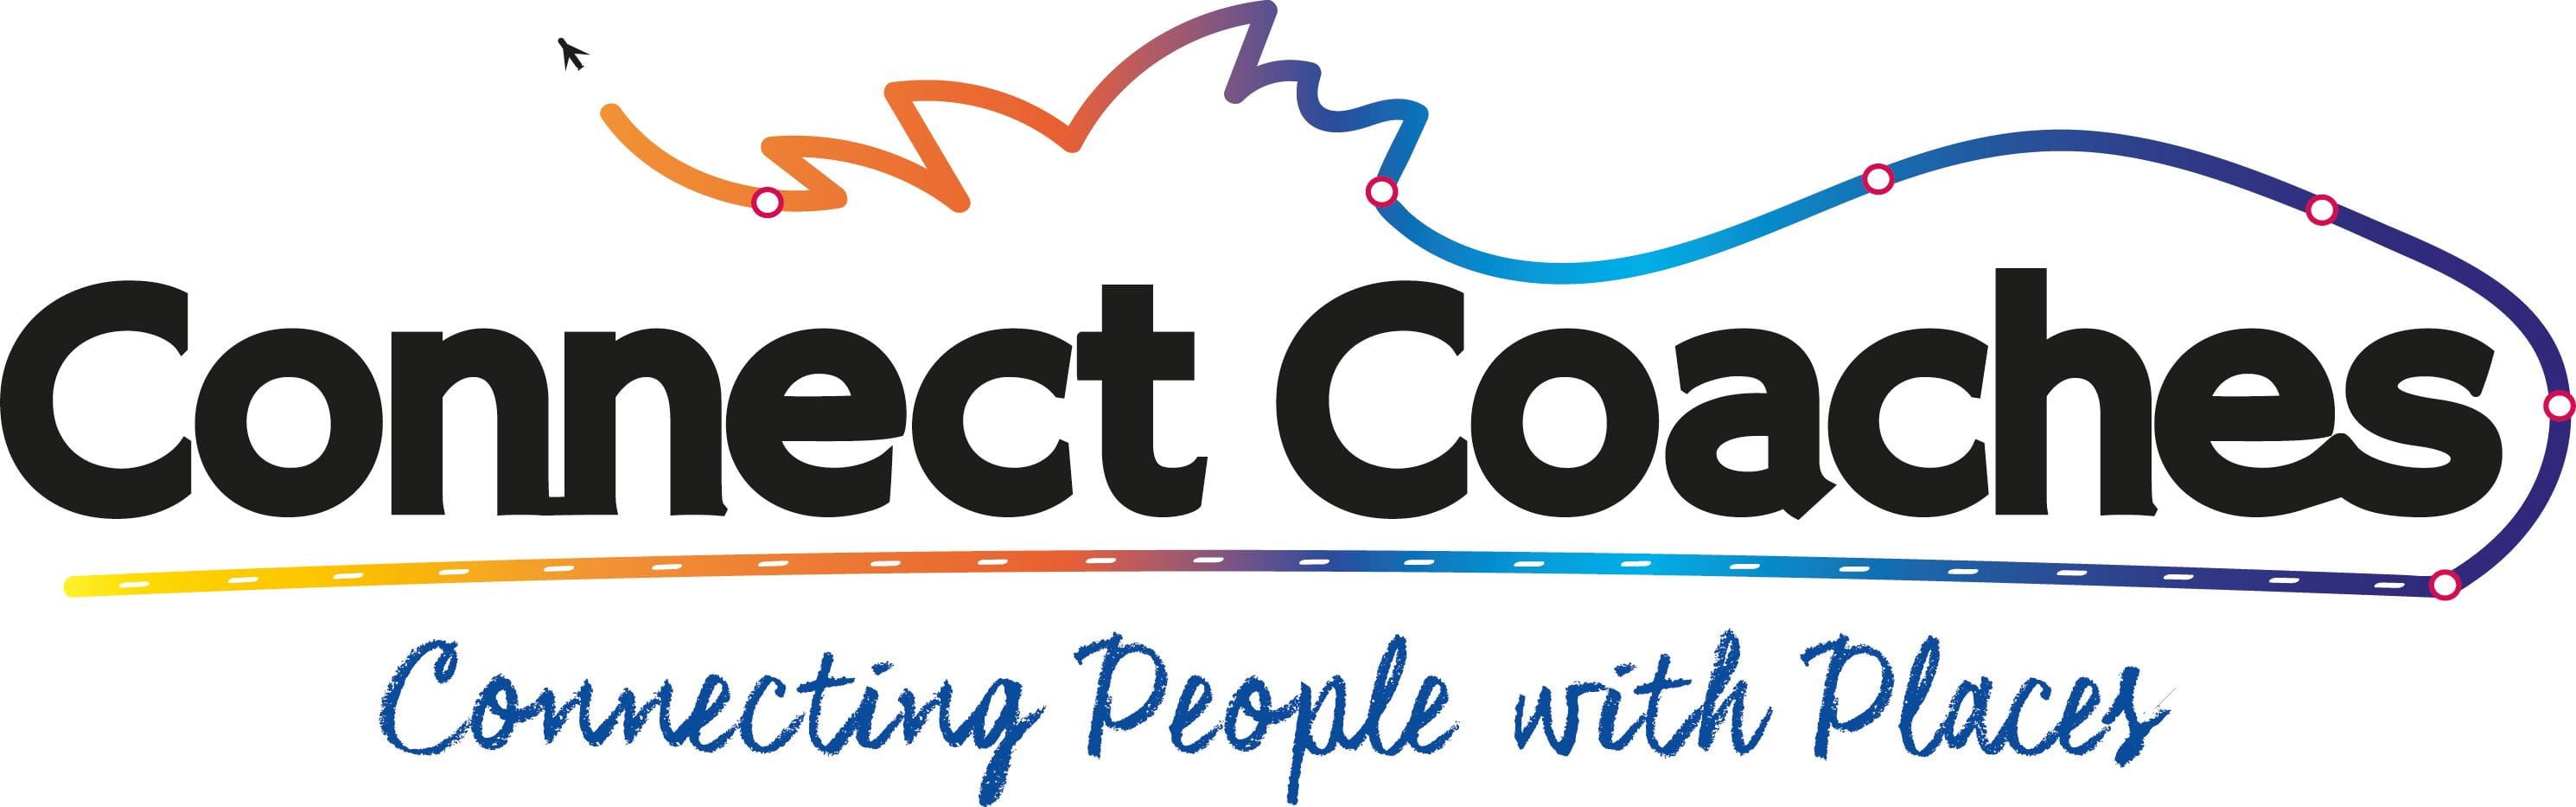 Connect Coaches Central Coast Coach Company